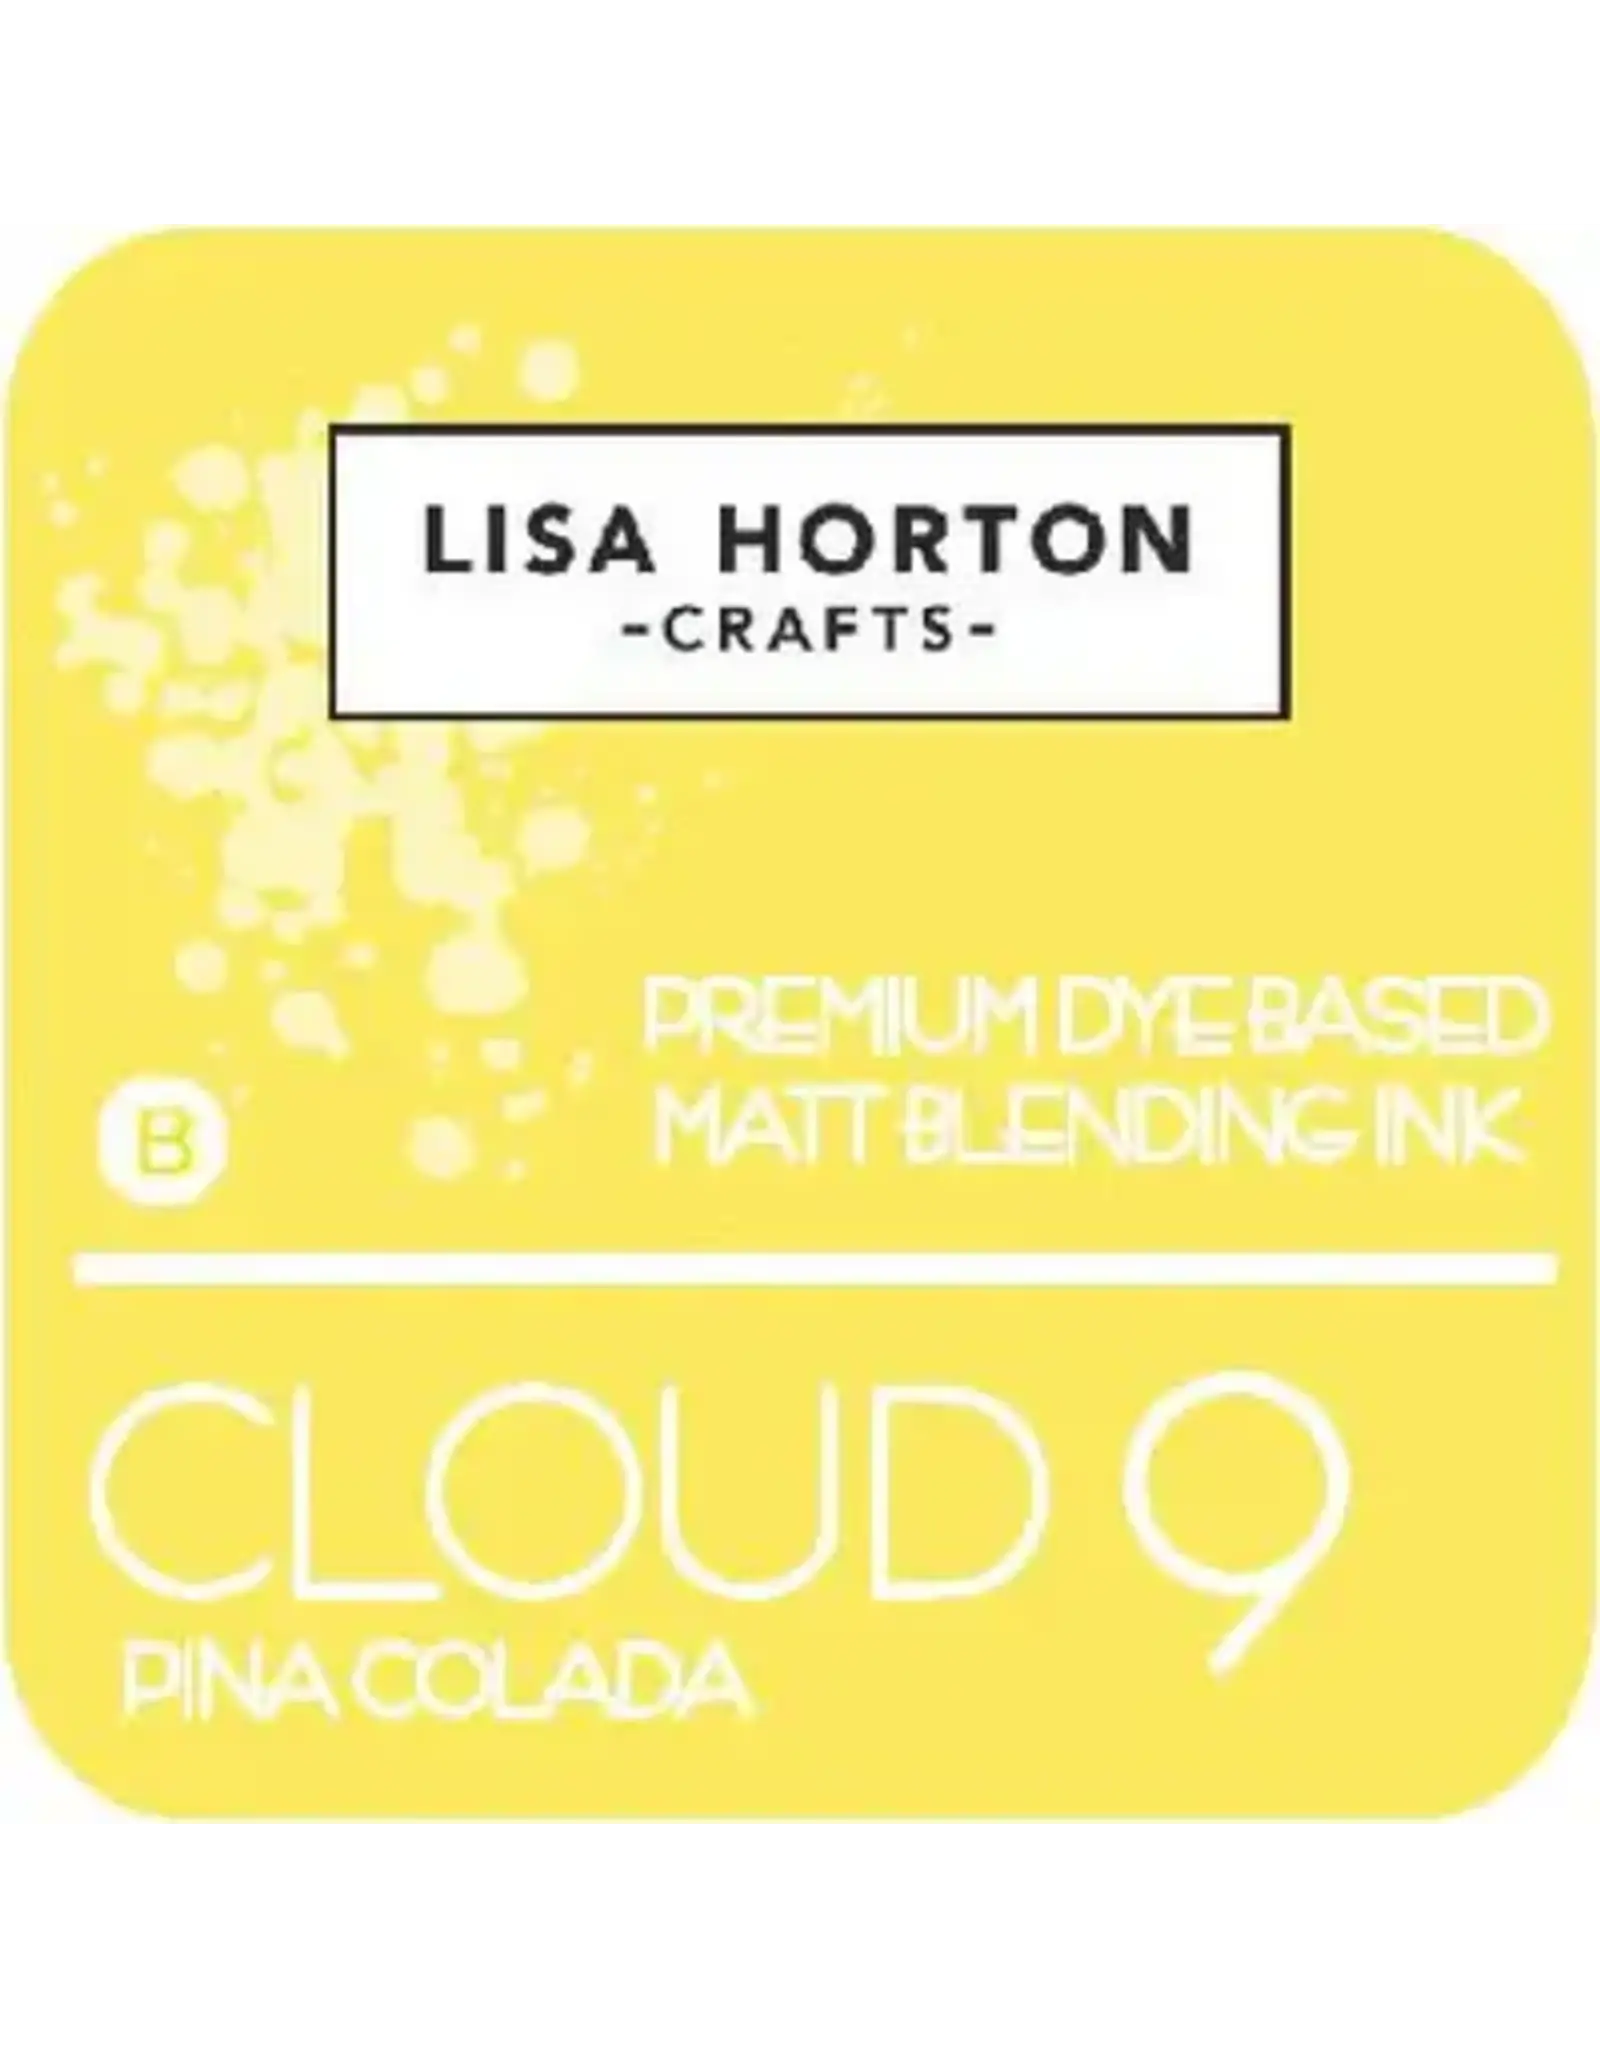 LISA HORTON CRAFTS LISA HORTON CRAFTS CLOUD 9 MATT BLENDING INK - PINA COLADA